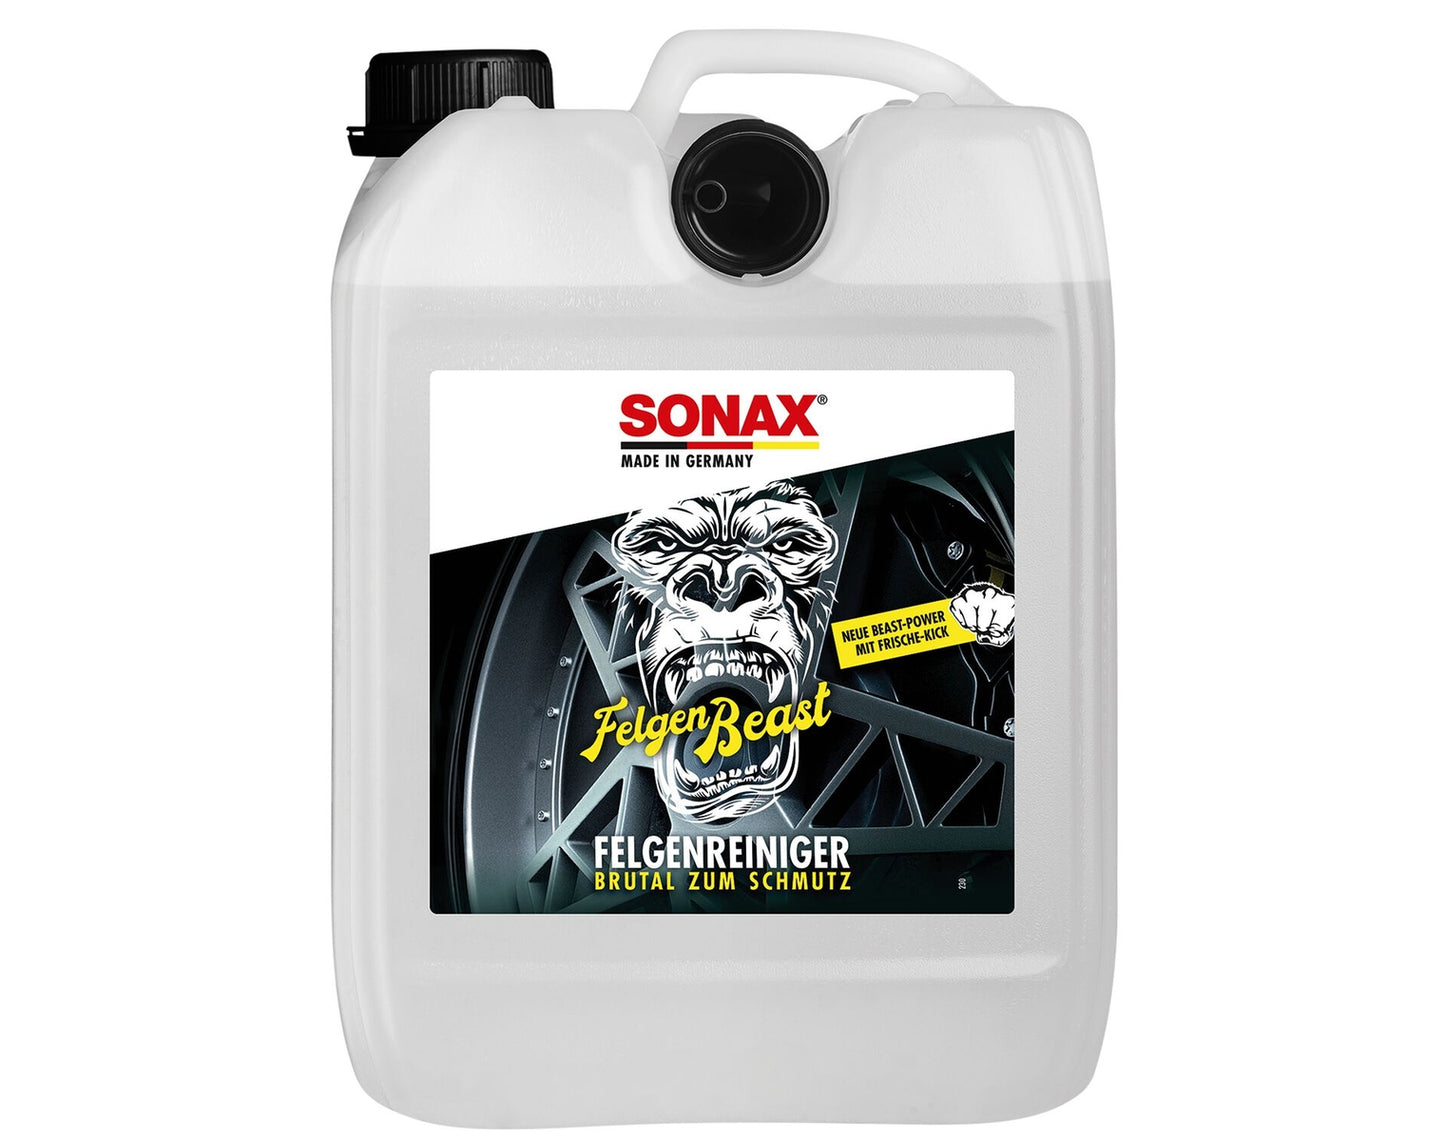 Sonax FelgenBeast (5 Liter)